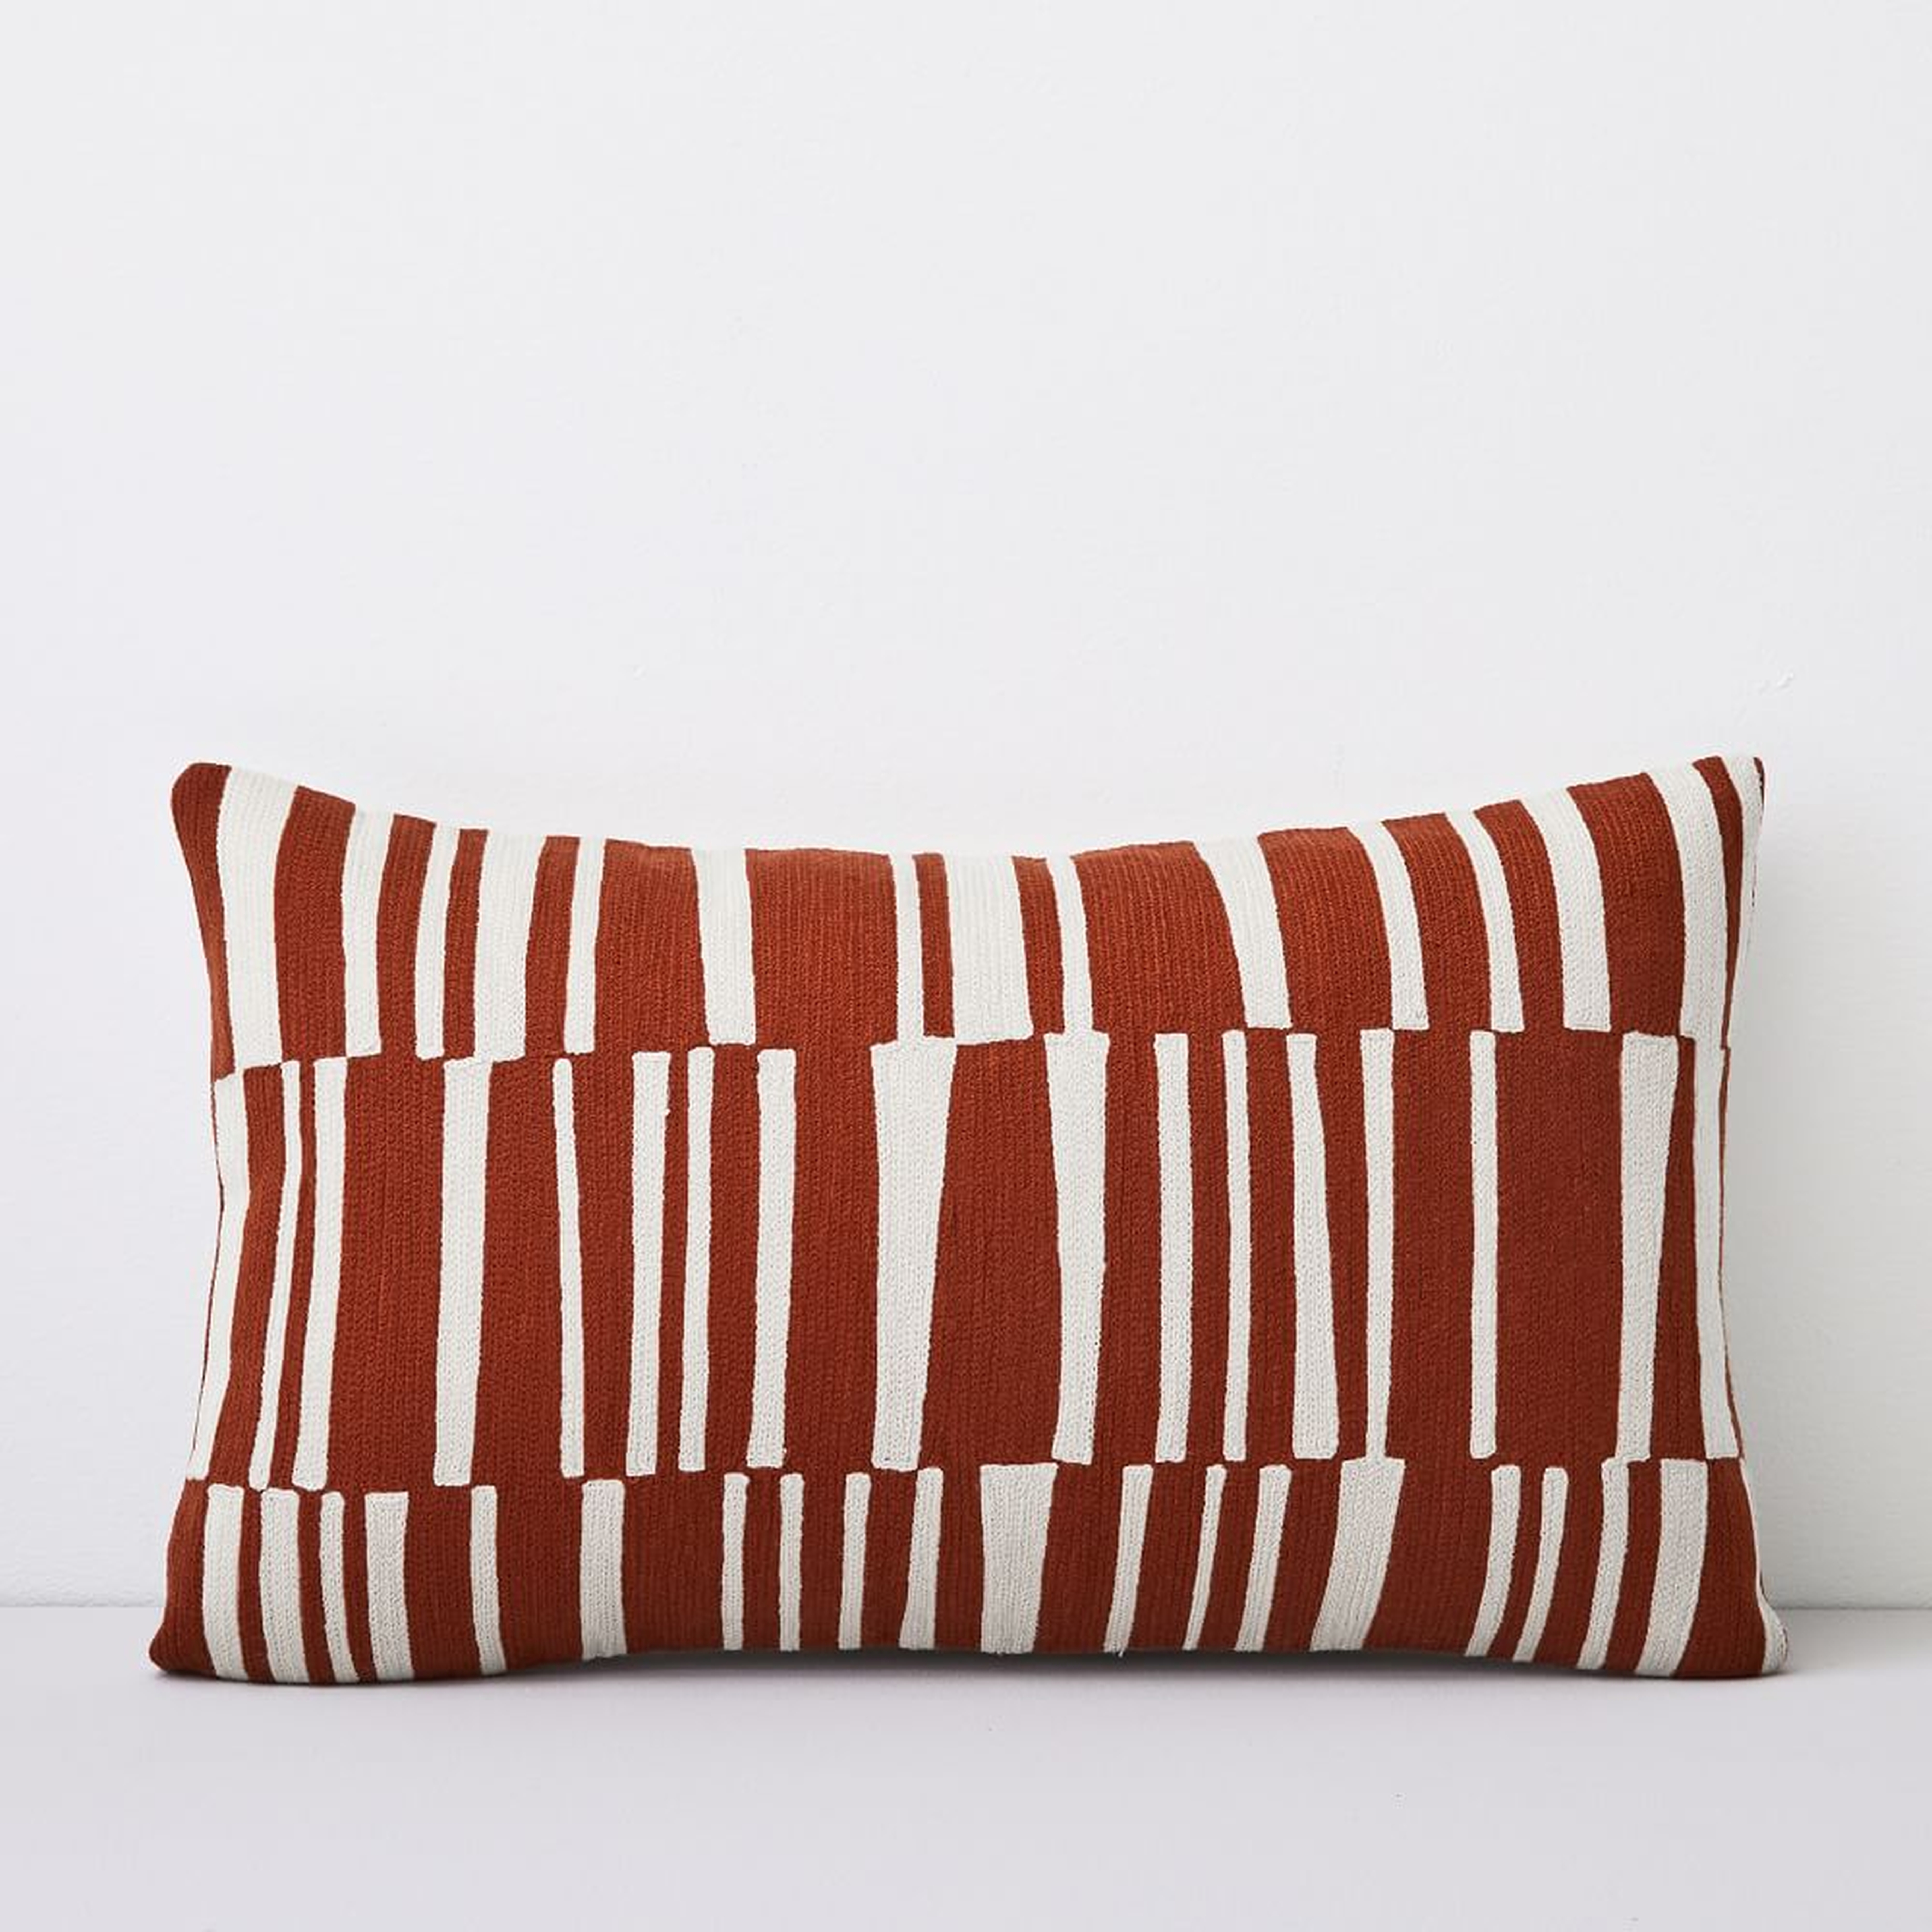 Crewel Linear Pillow Cover, Copper, 12"x21" - West Elm